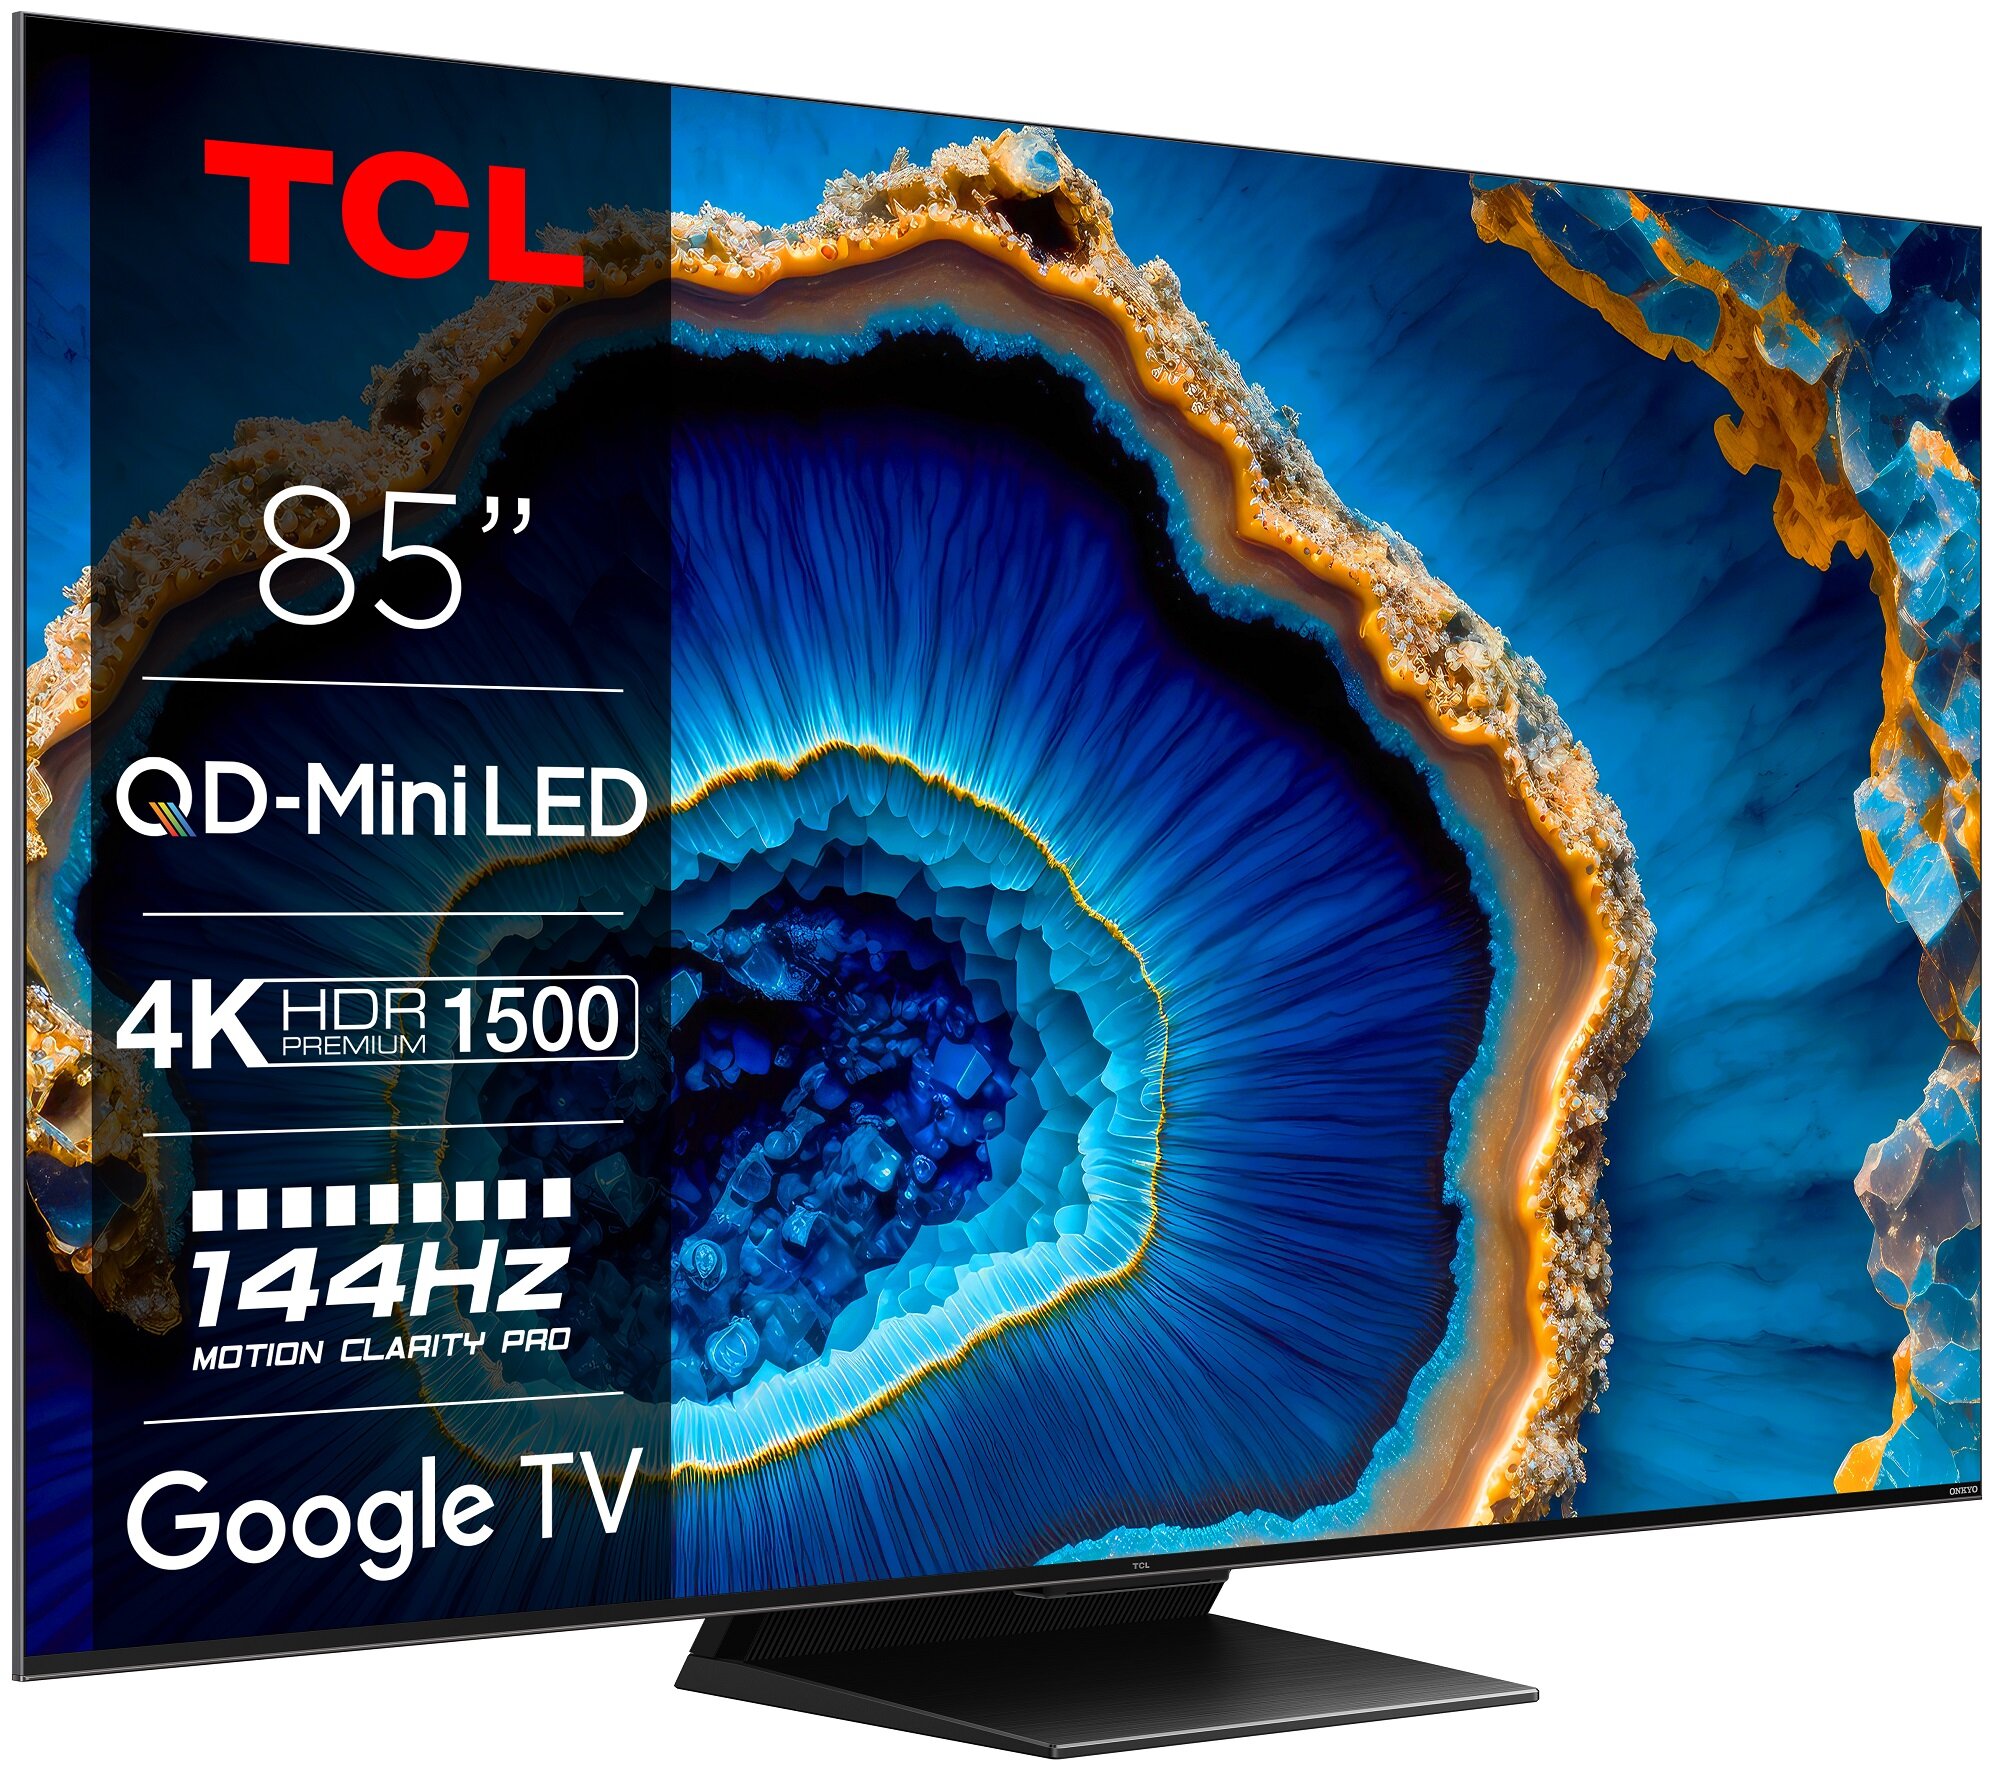 Telewizor TCL 85C809 85'' MINILED 4K 144Hz Google TV Dolby Vision Dolby Atmos HDMI 2.1